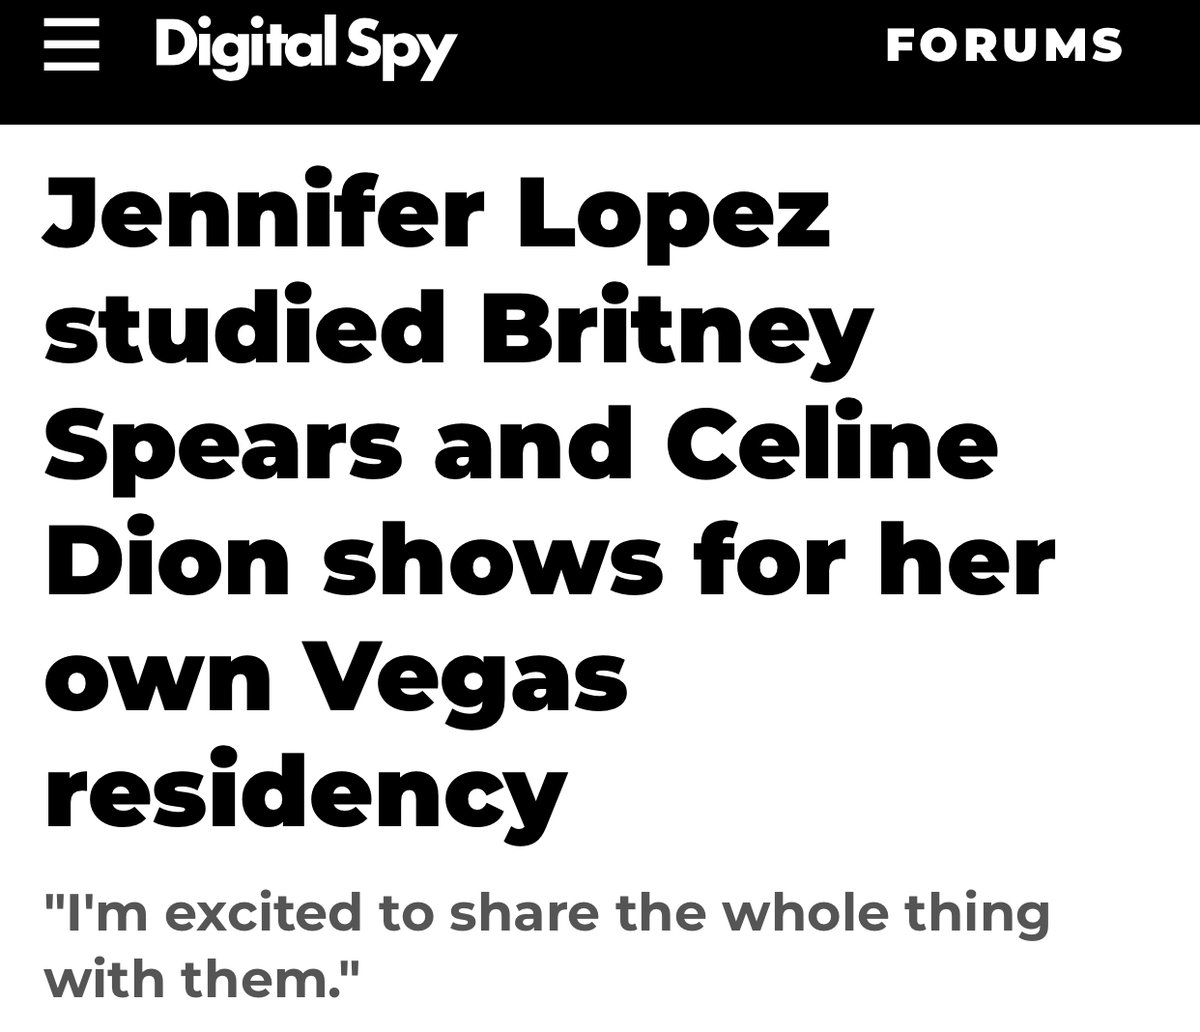 Jennifer Lopez said she studied Britney's show for her own Vegas residency.